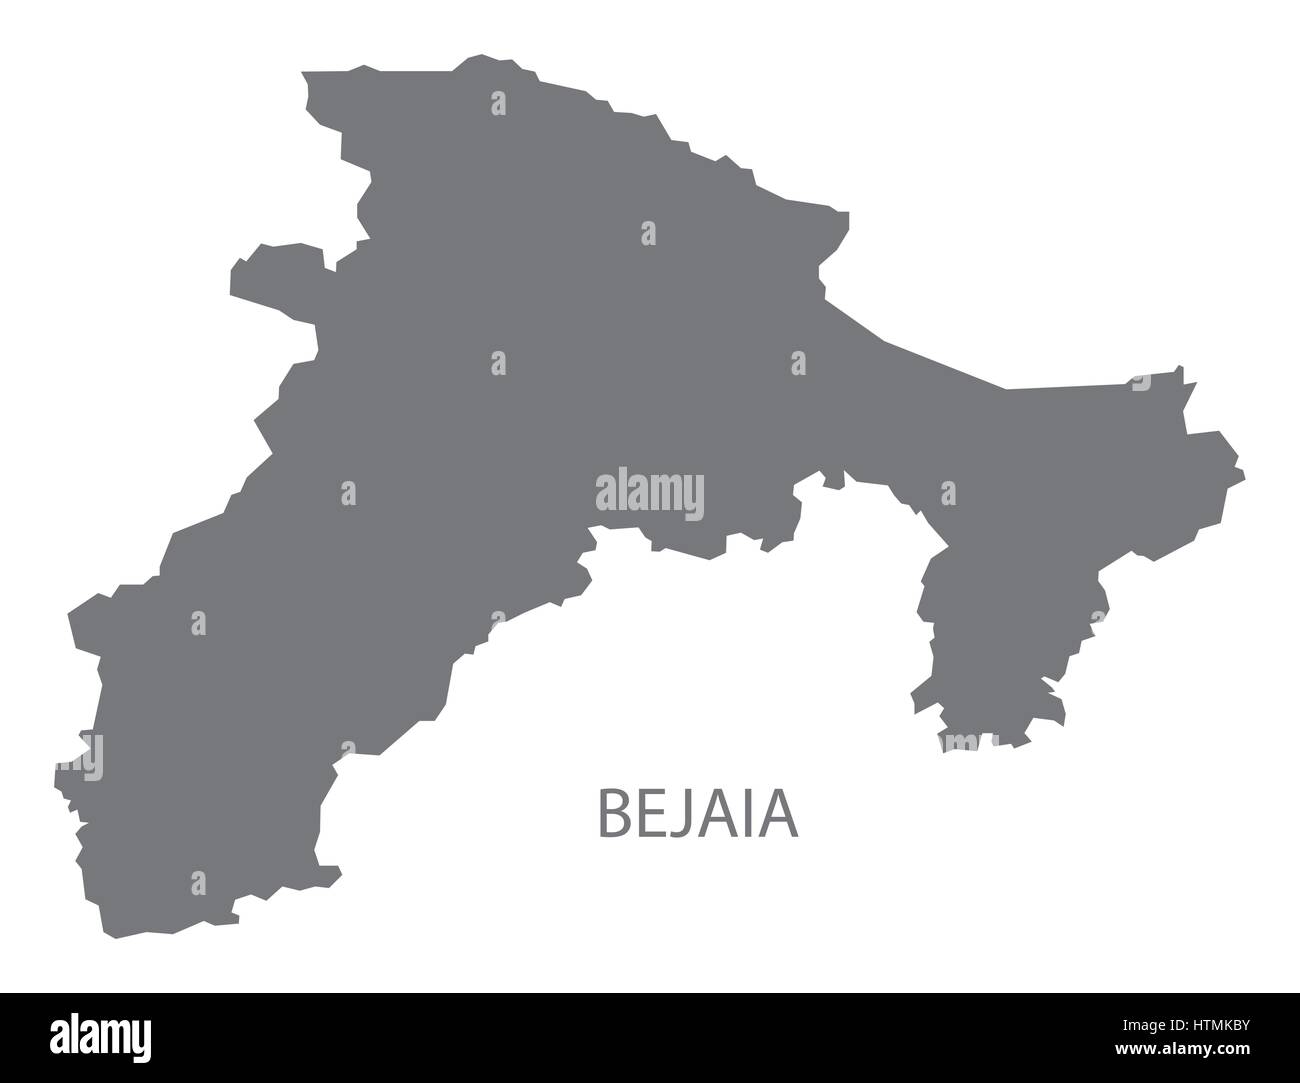 Bejaia Algeria map grey illustration silhouette Stock Vector